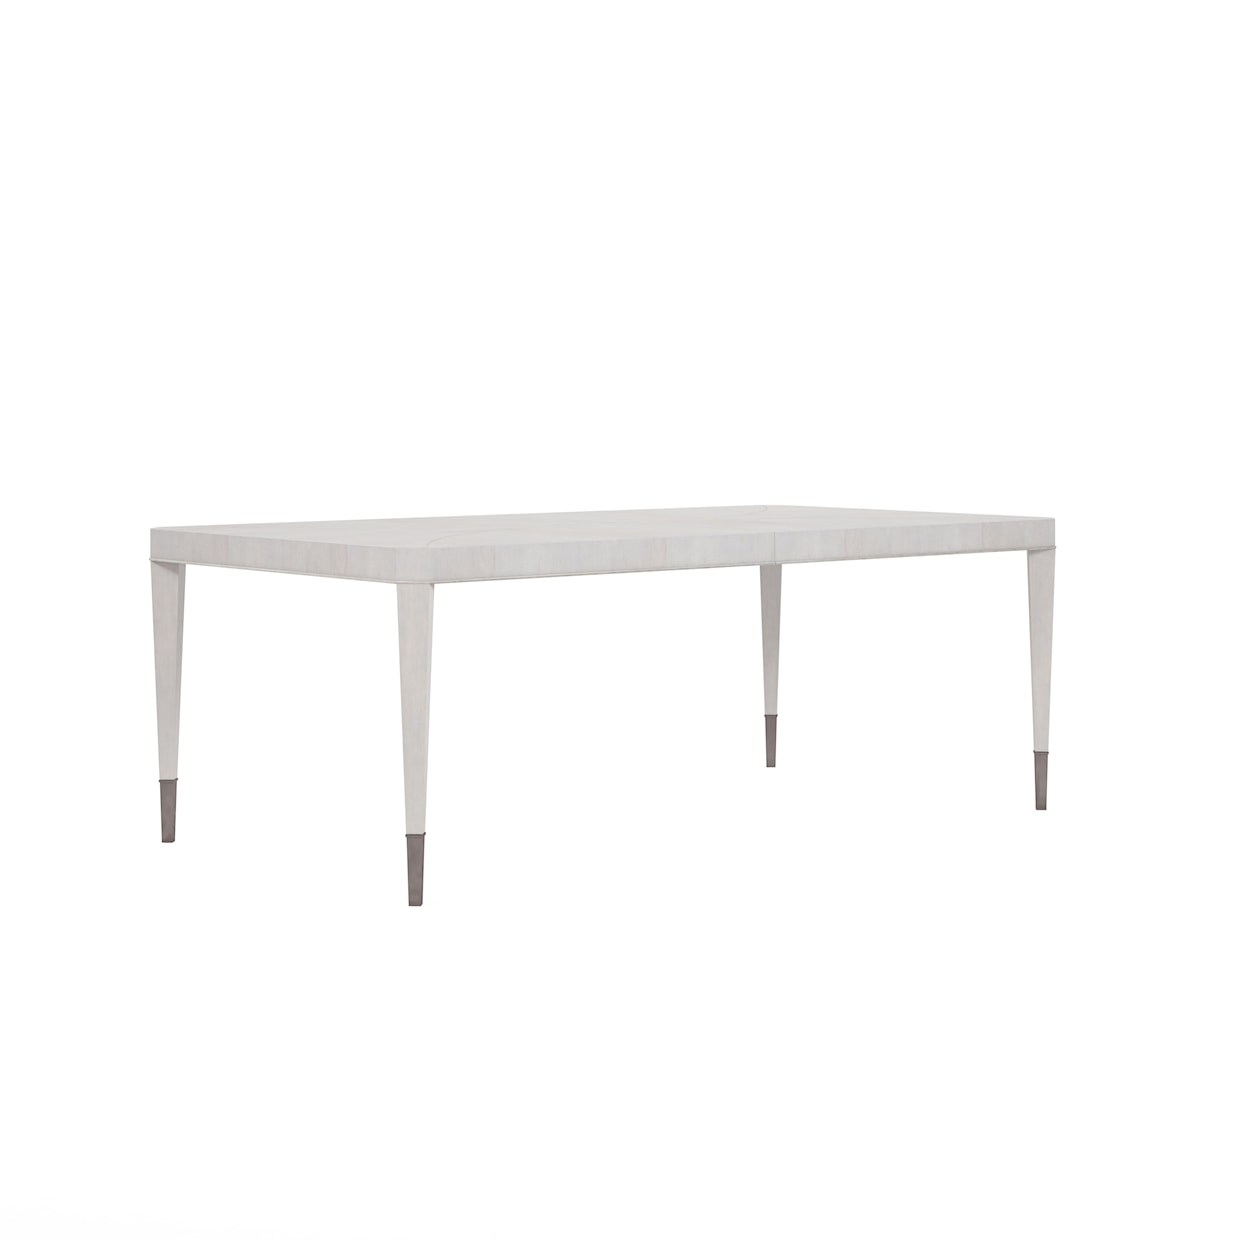 A.R.T. Furniture Inc Mezzanine Rectangular Dining Table